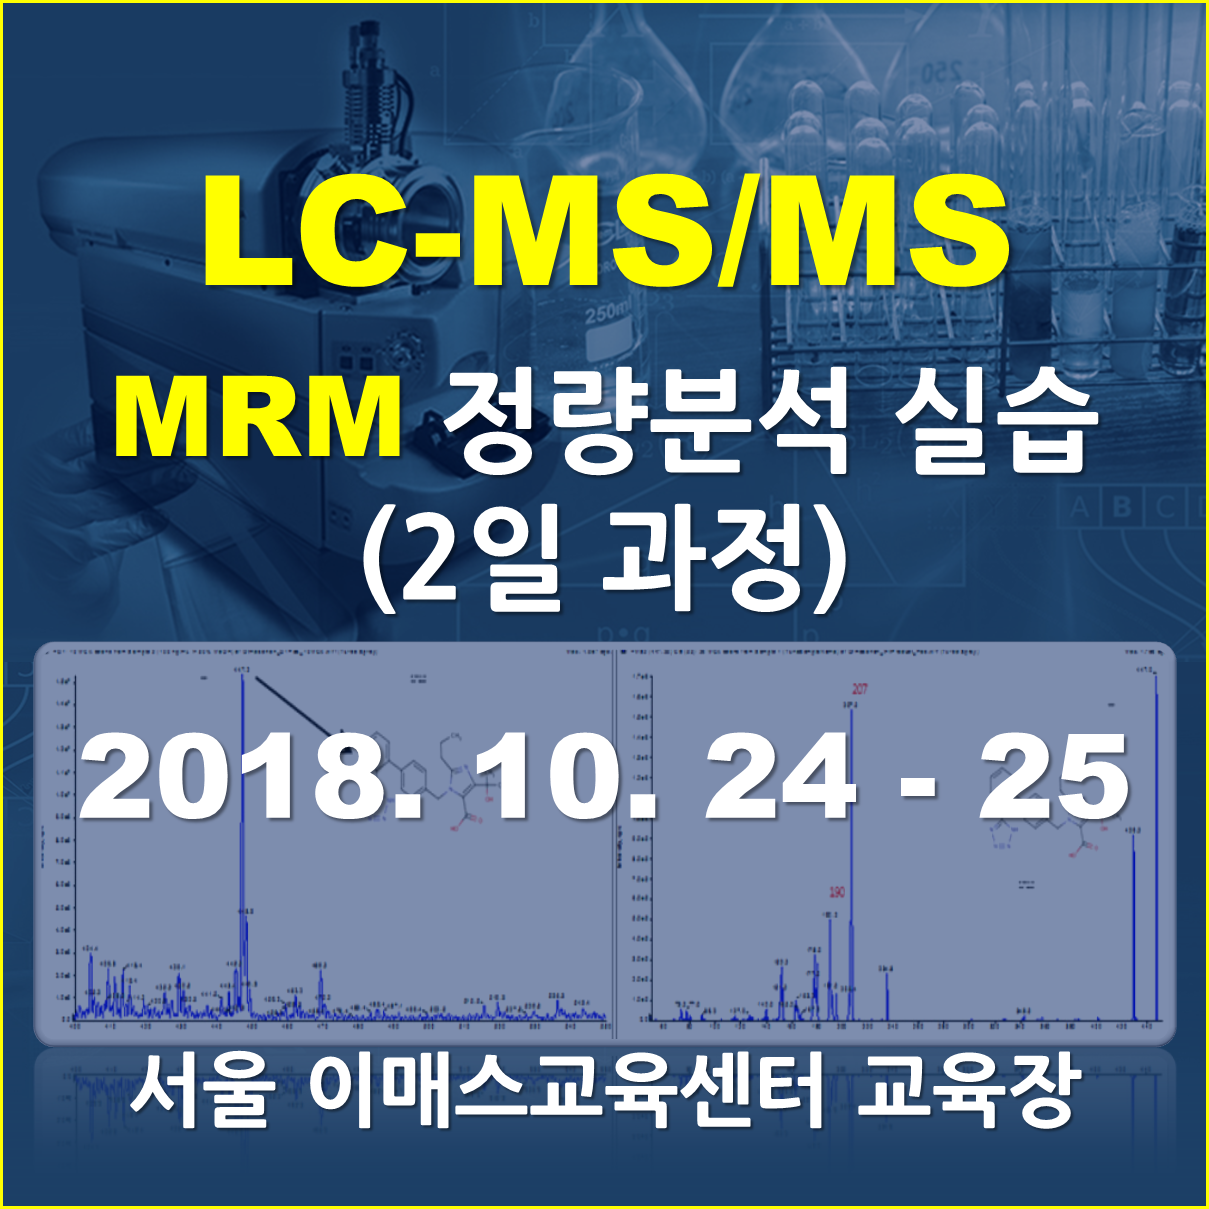 LC-MS/MS를 이용한 MRM 정량분석실습 (2일 과정)